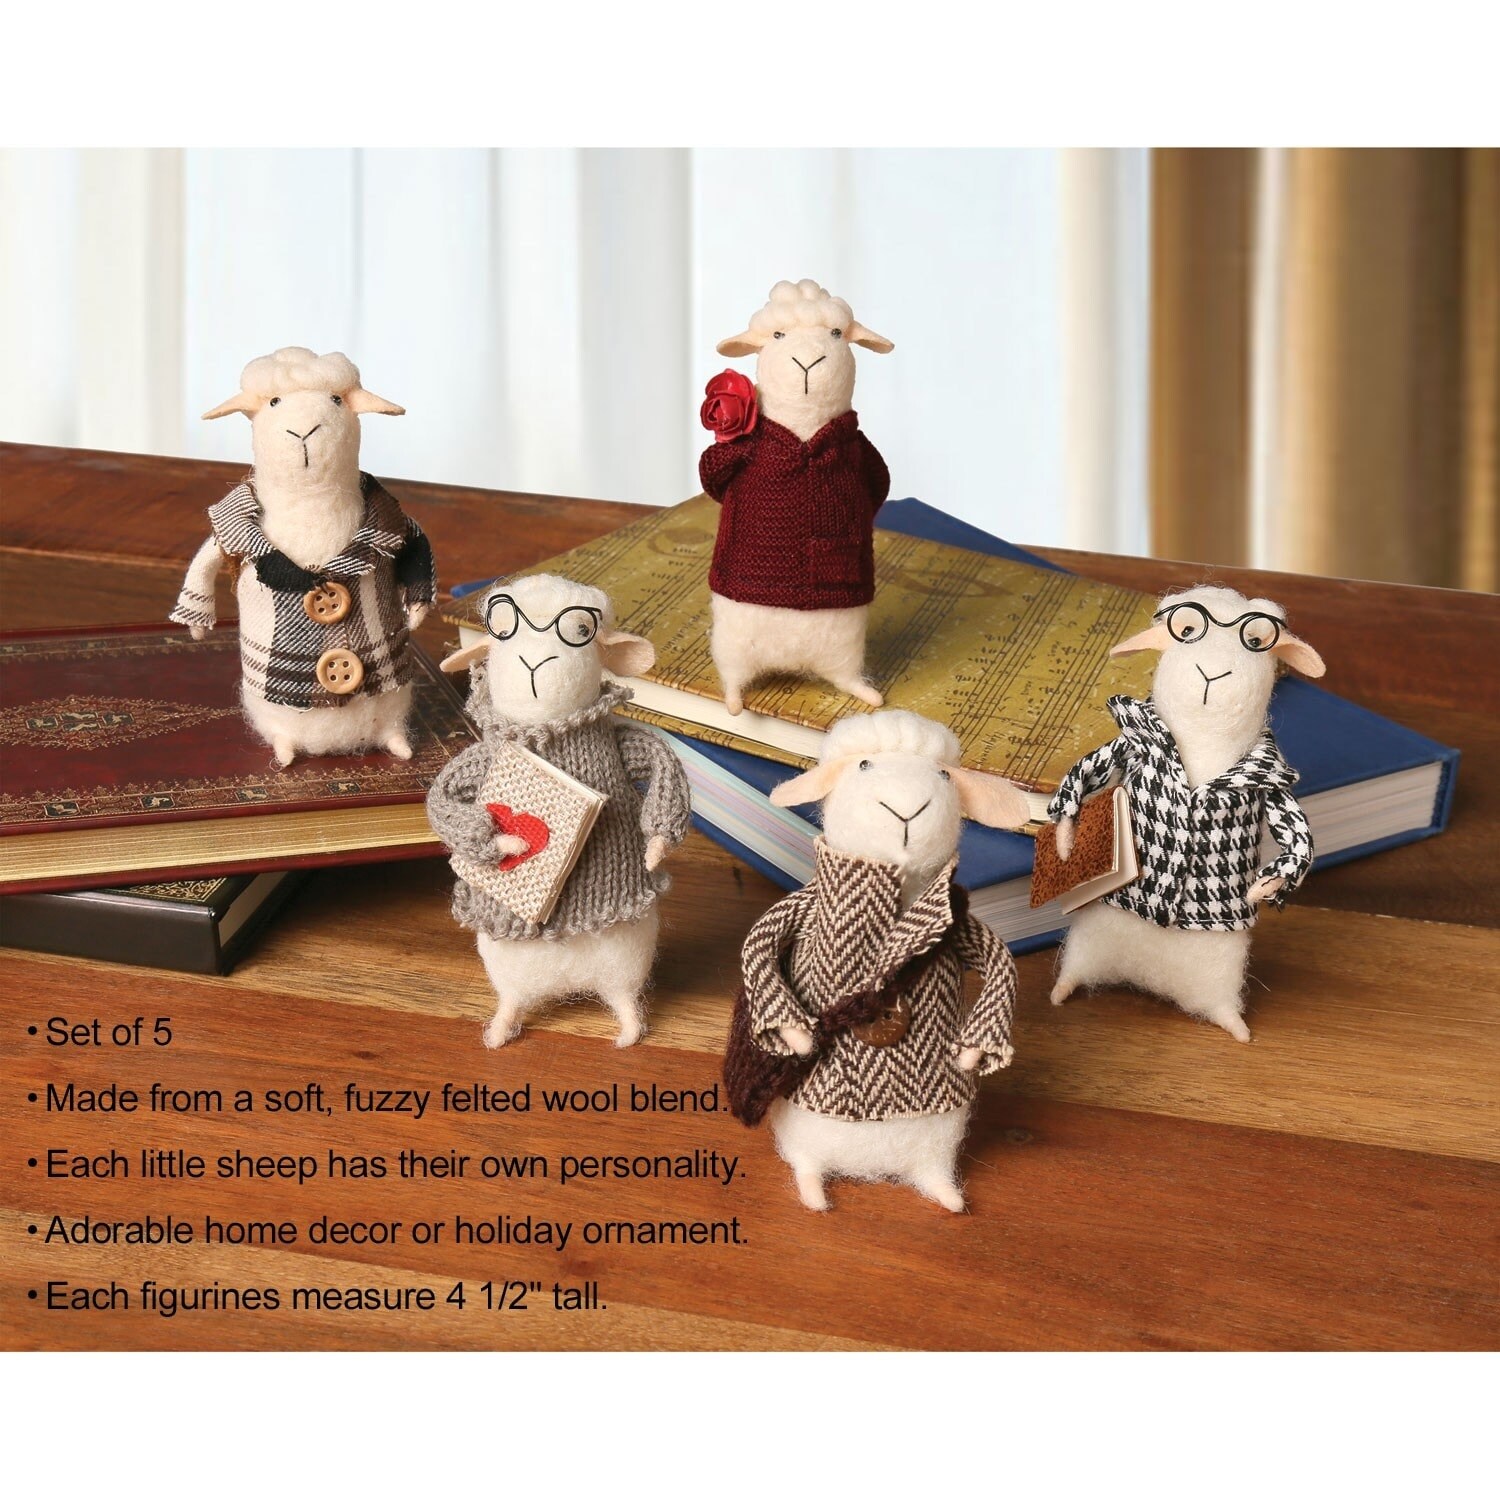 Sheep Lamb Shelf Sitter Ceramic and Real Lambs Wool 7 tall seated  whimsical